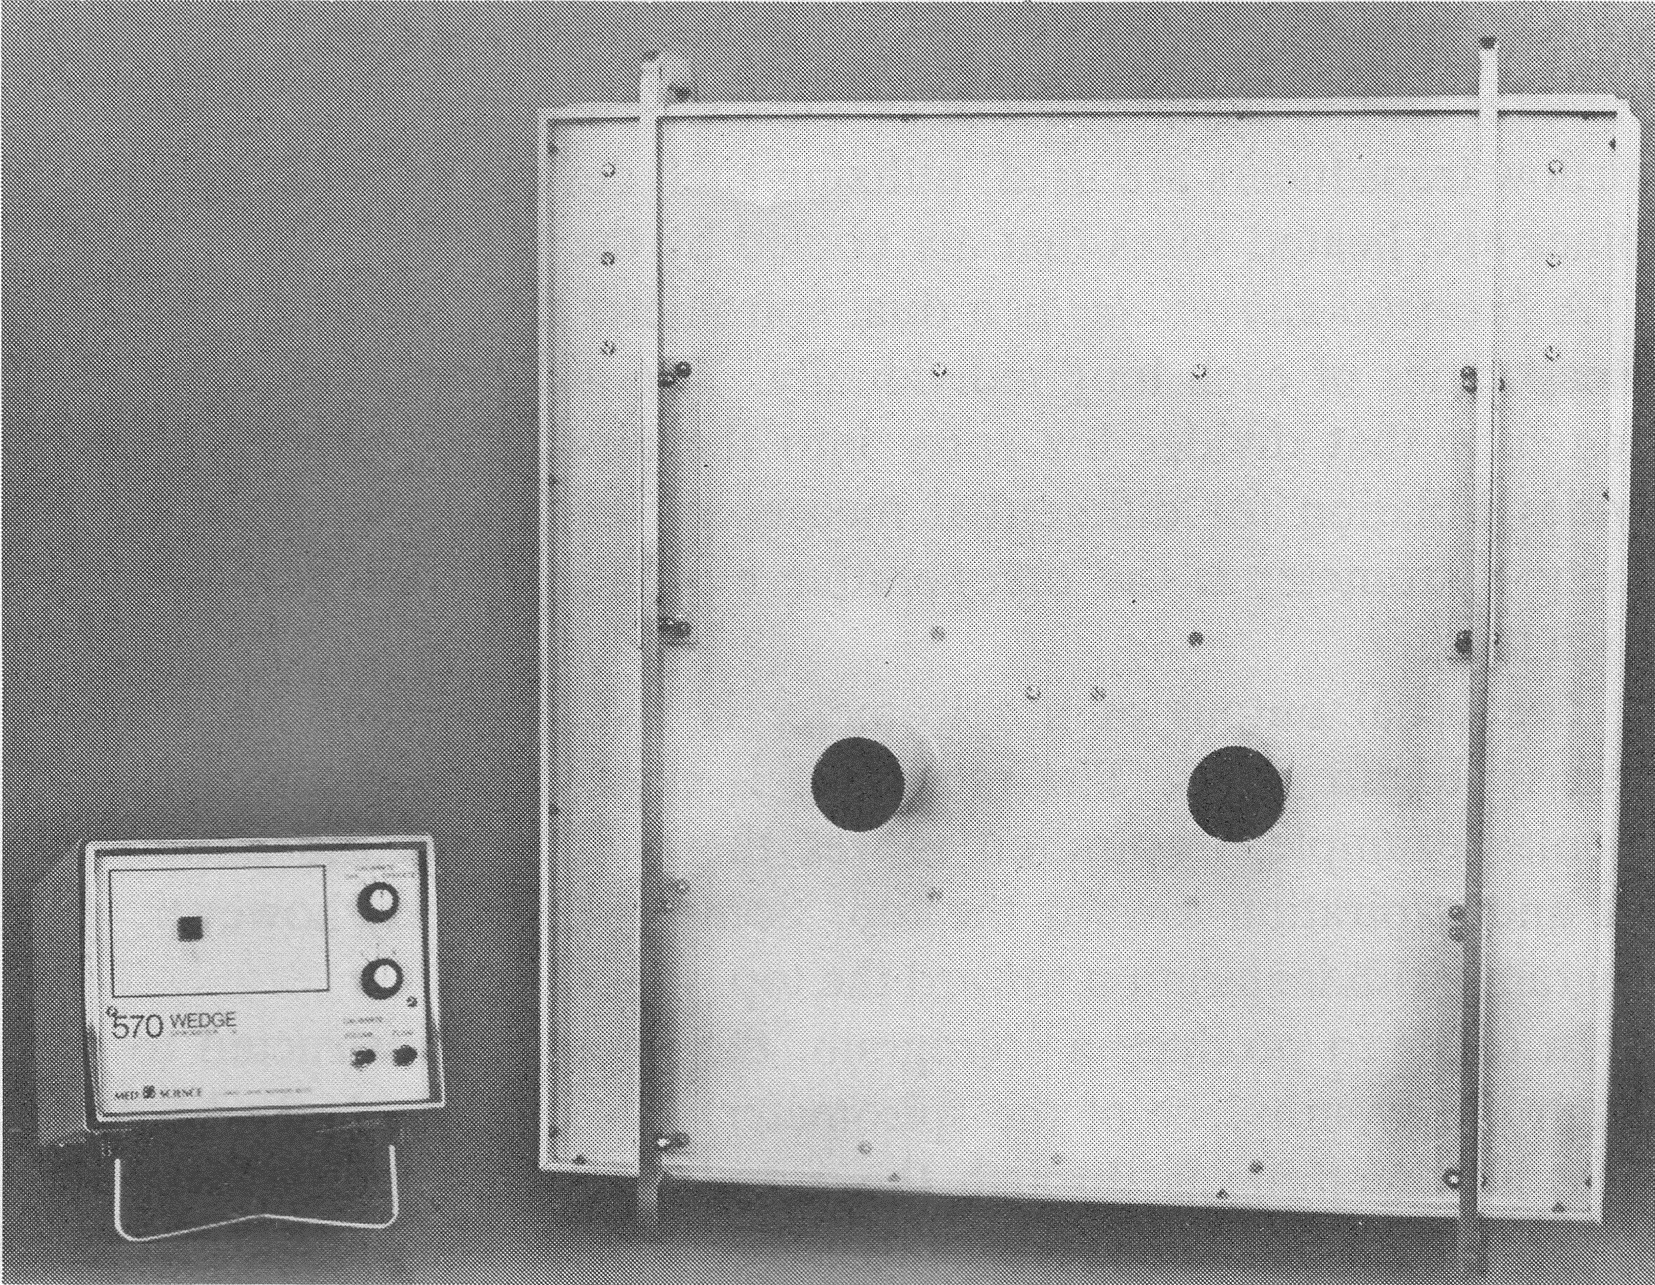 spirometer_med-science_model_570_wedge_1976